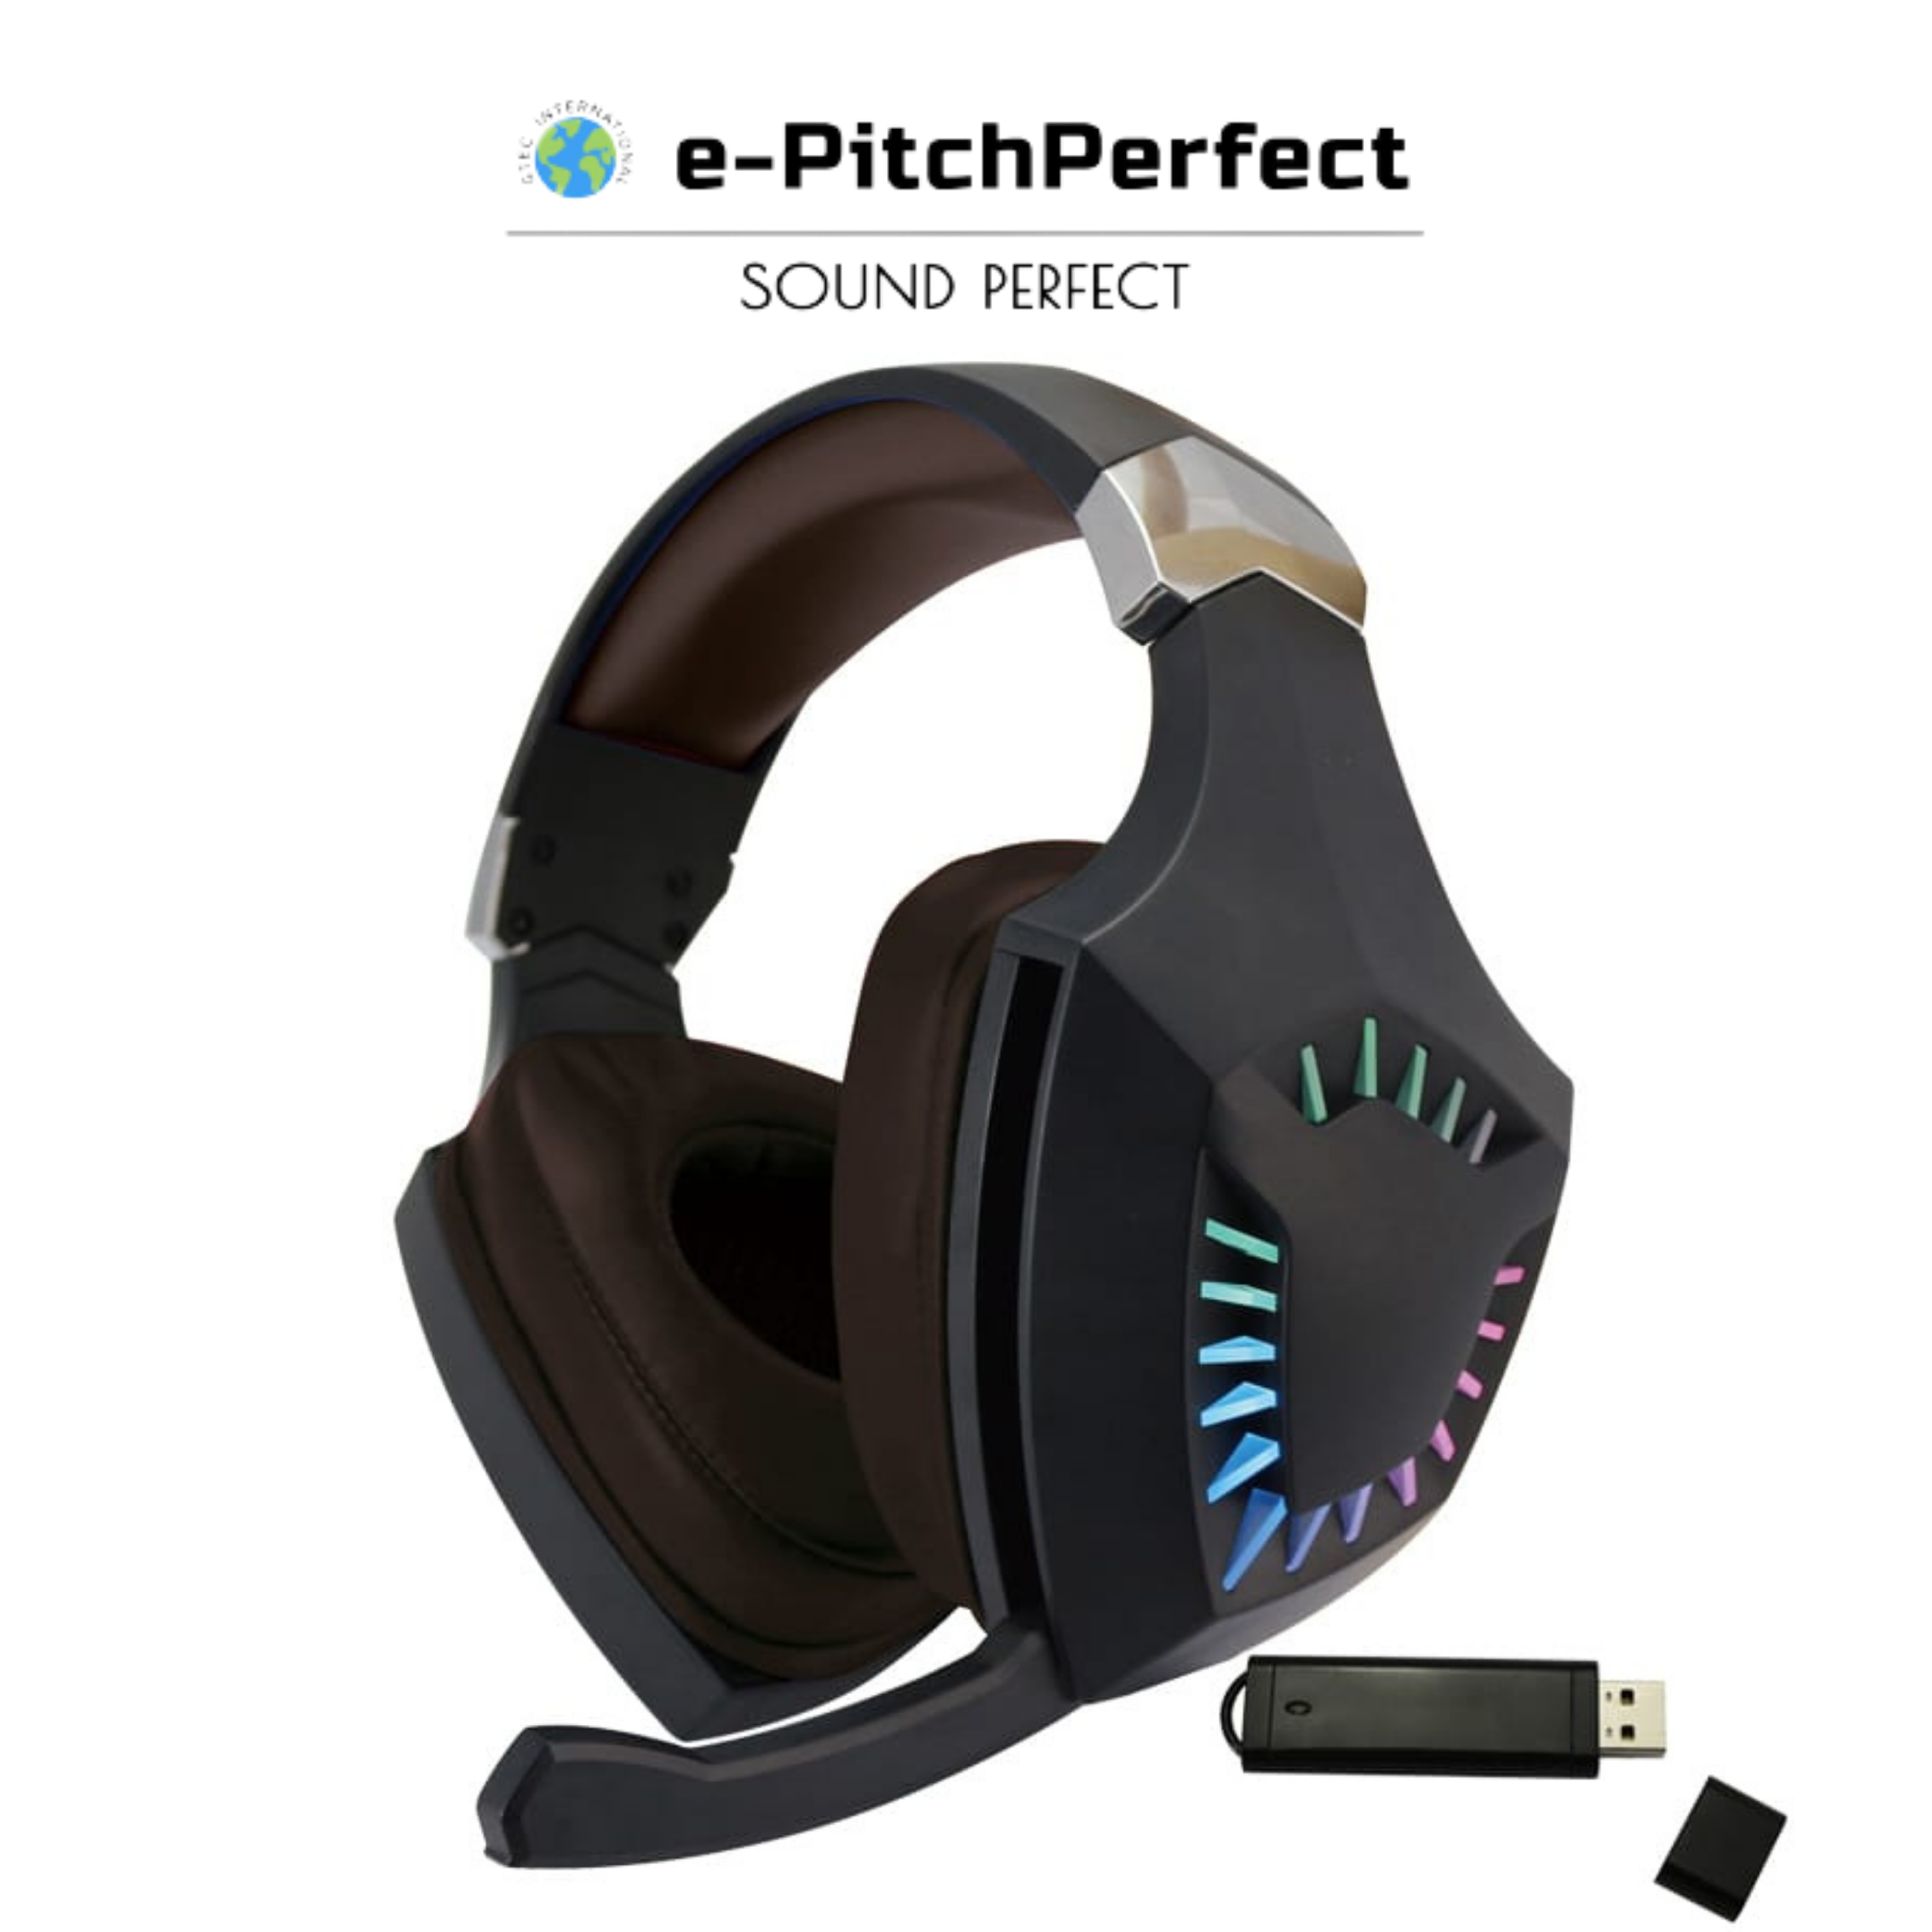 e-PitchPerfect e-PP 2.4G 无线游戏耳机带麦克风兼容 PS4、Xbox One、笔记本电脑、PC、iPhone 和 Android 手机在美国设计和制造